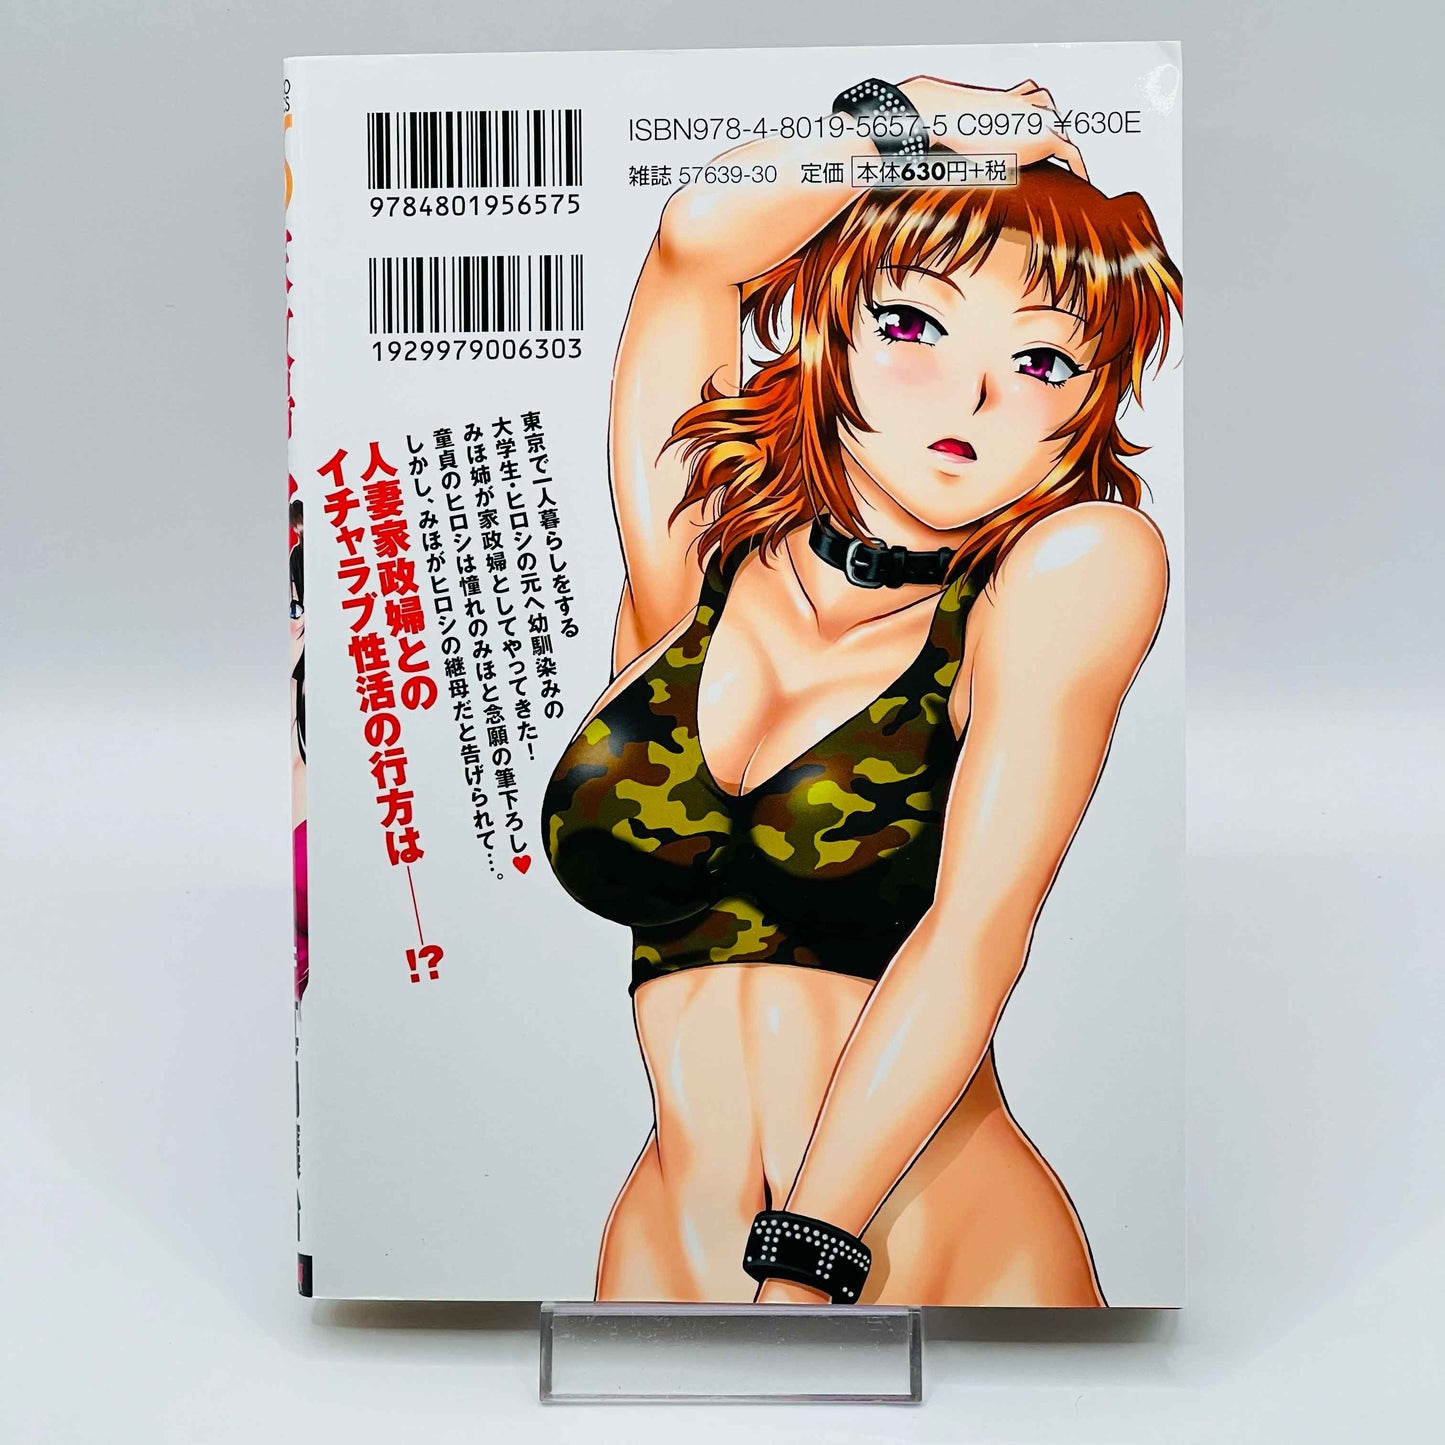 My Housekeeper is my Stepmother - Volume 01 - 1stPrint.net - 1st First Print Edition Manga Store - M-MHKIMSM-01-001